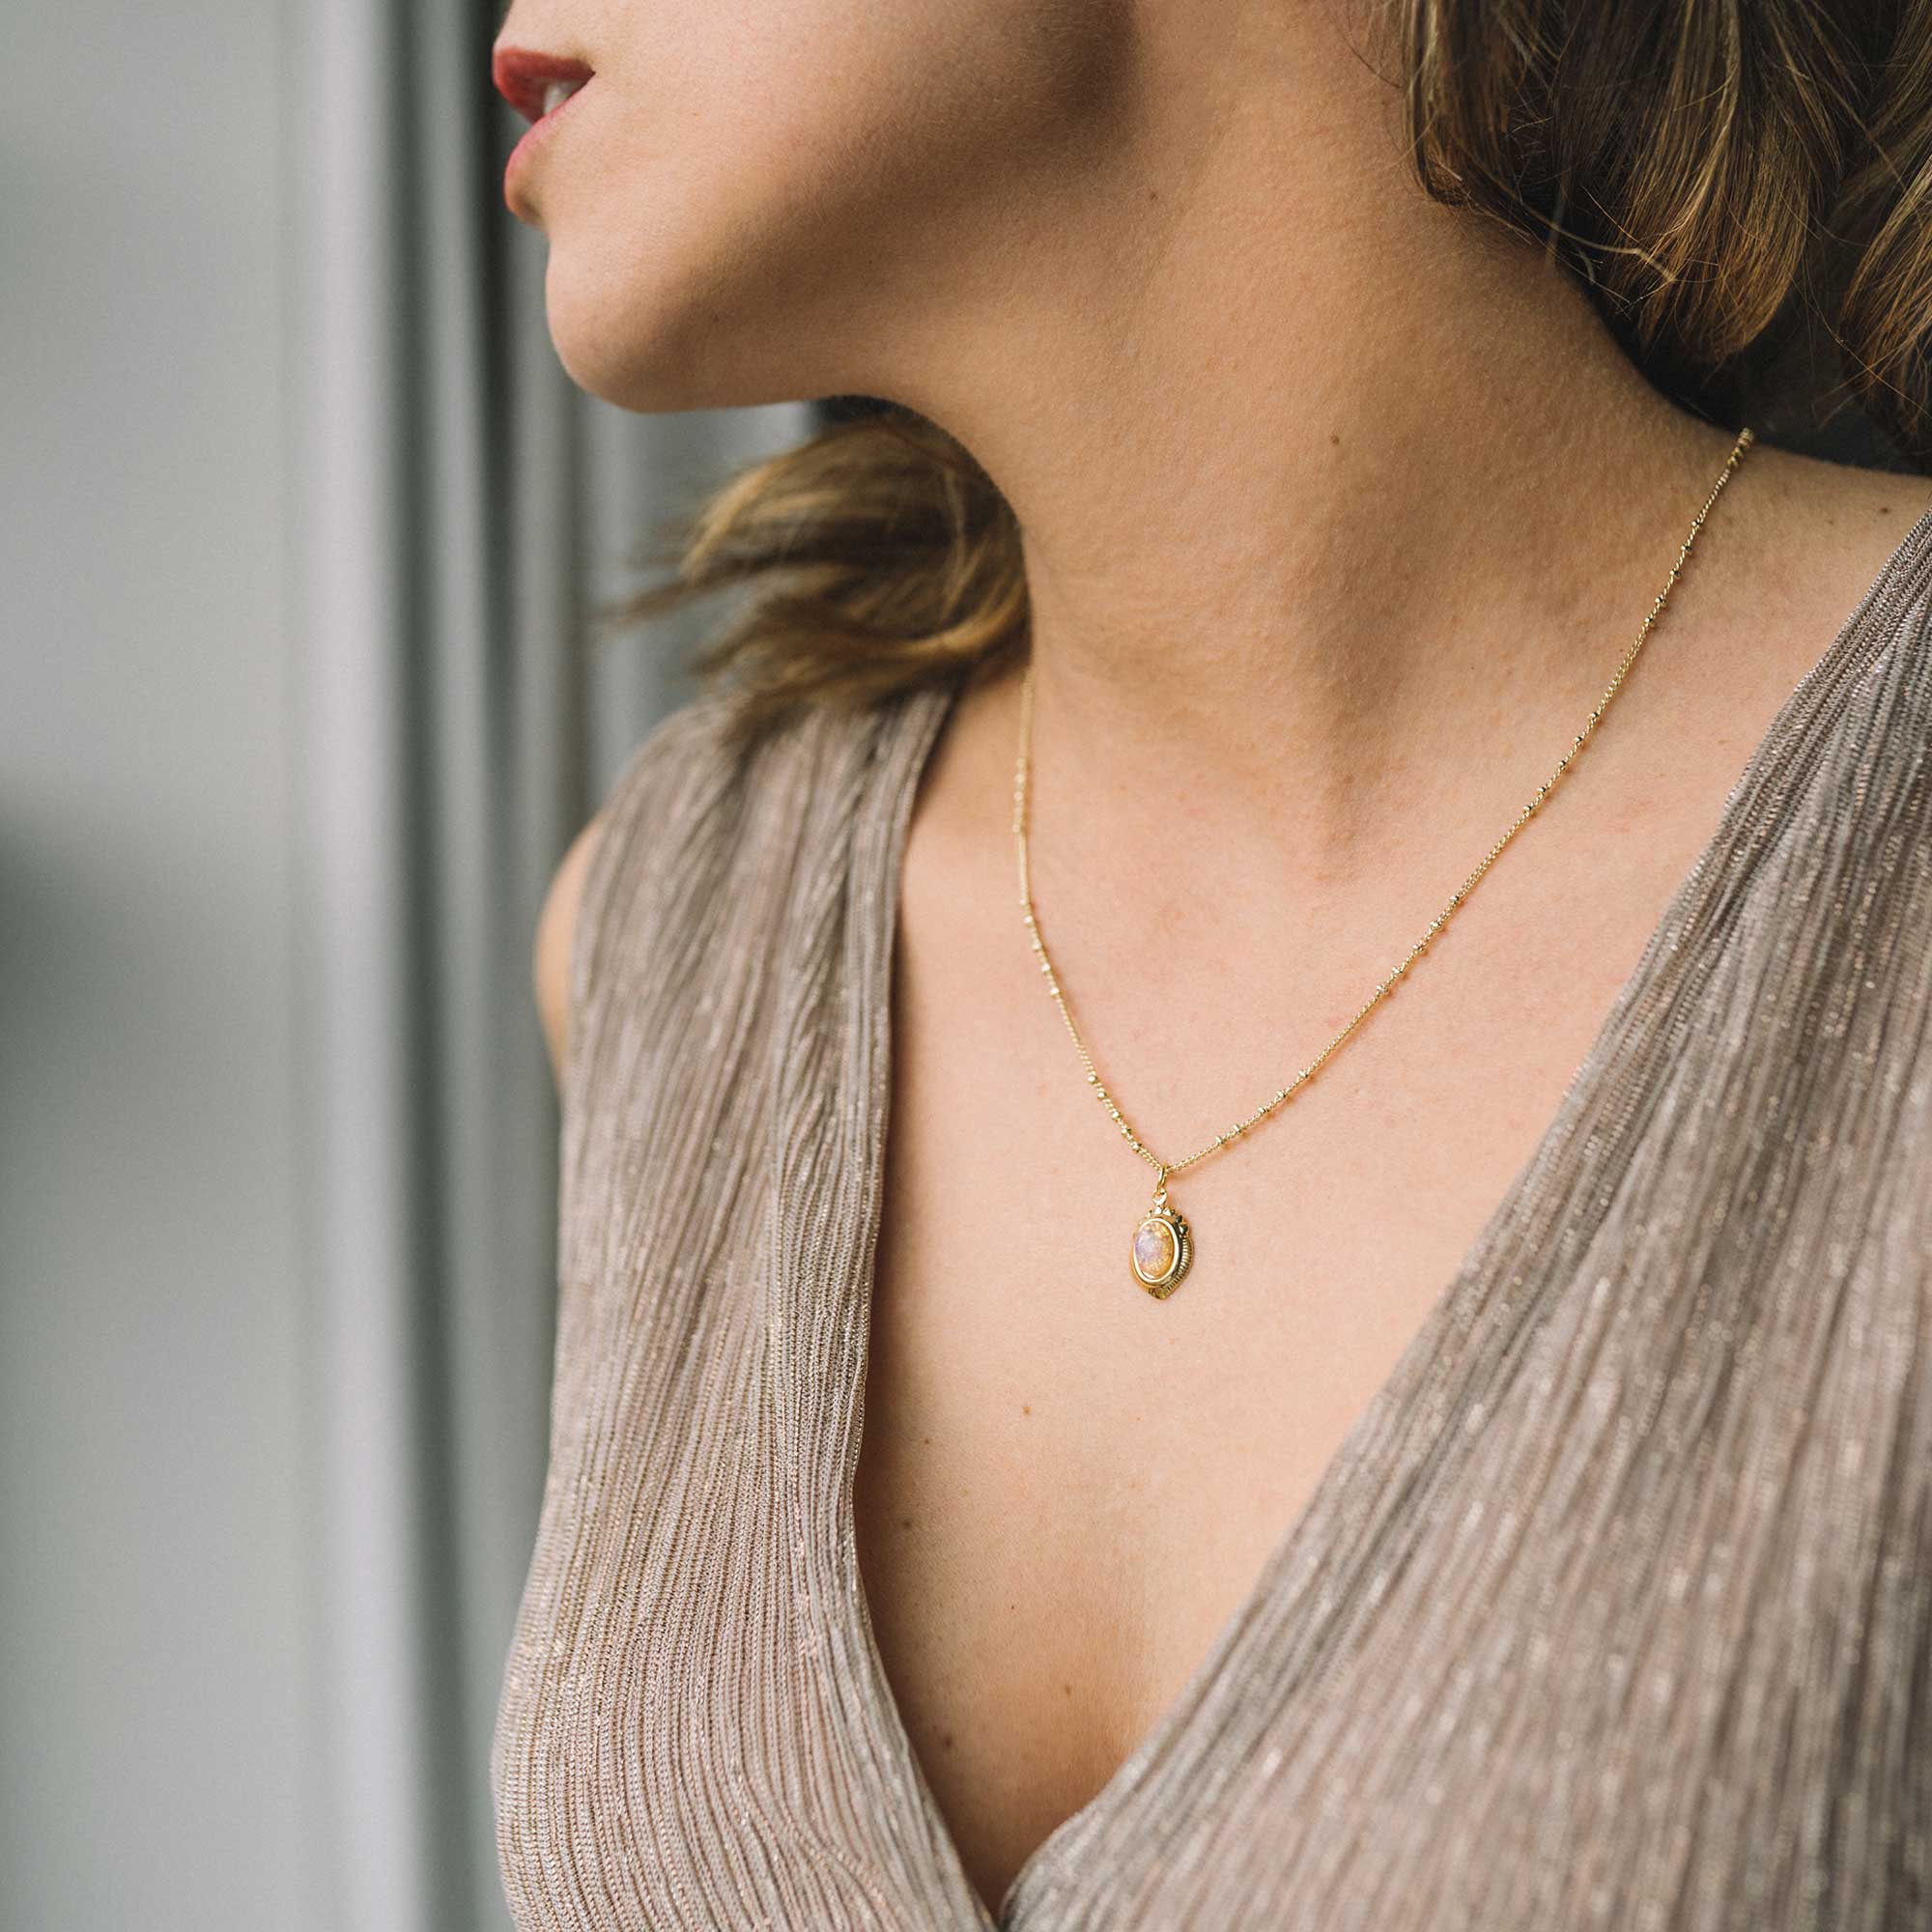 Sandrine devost jewelry necklace gold filled